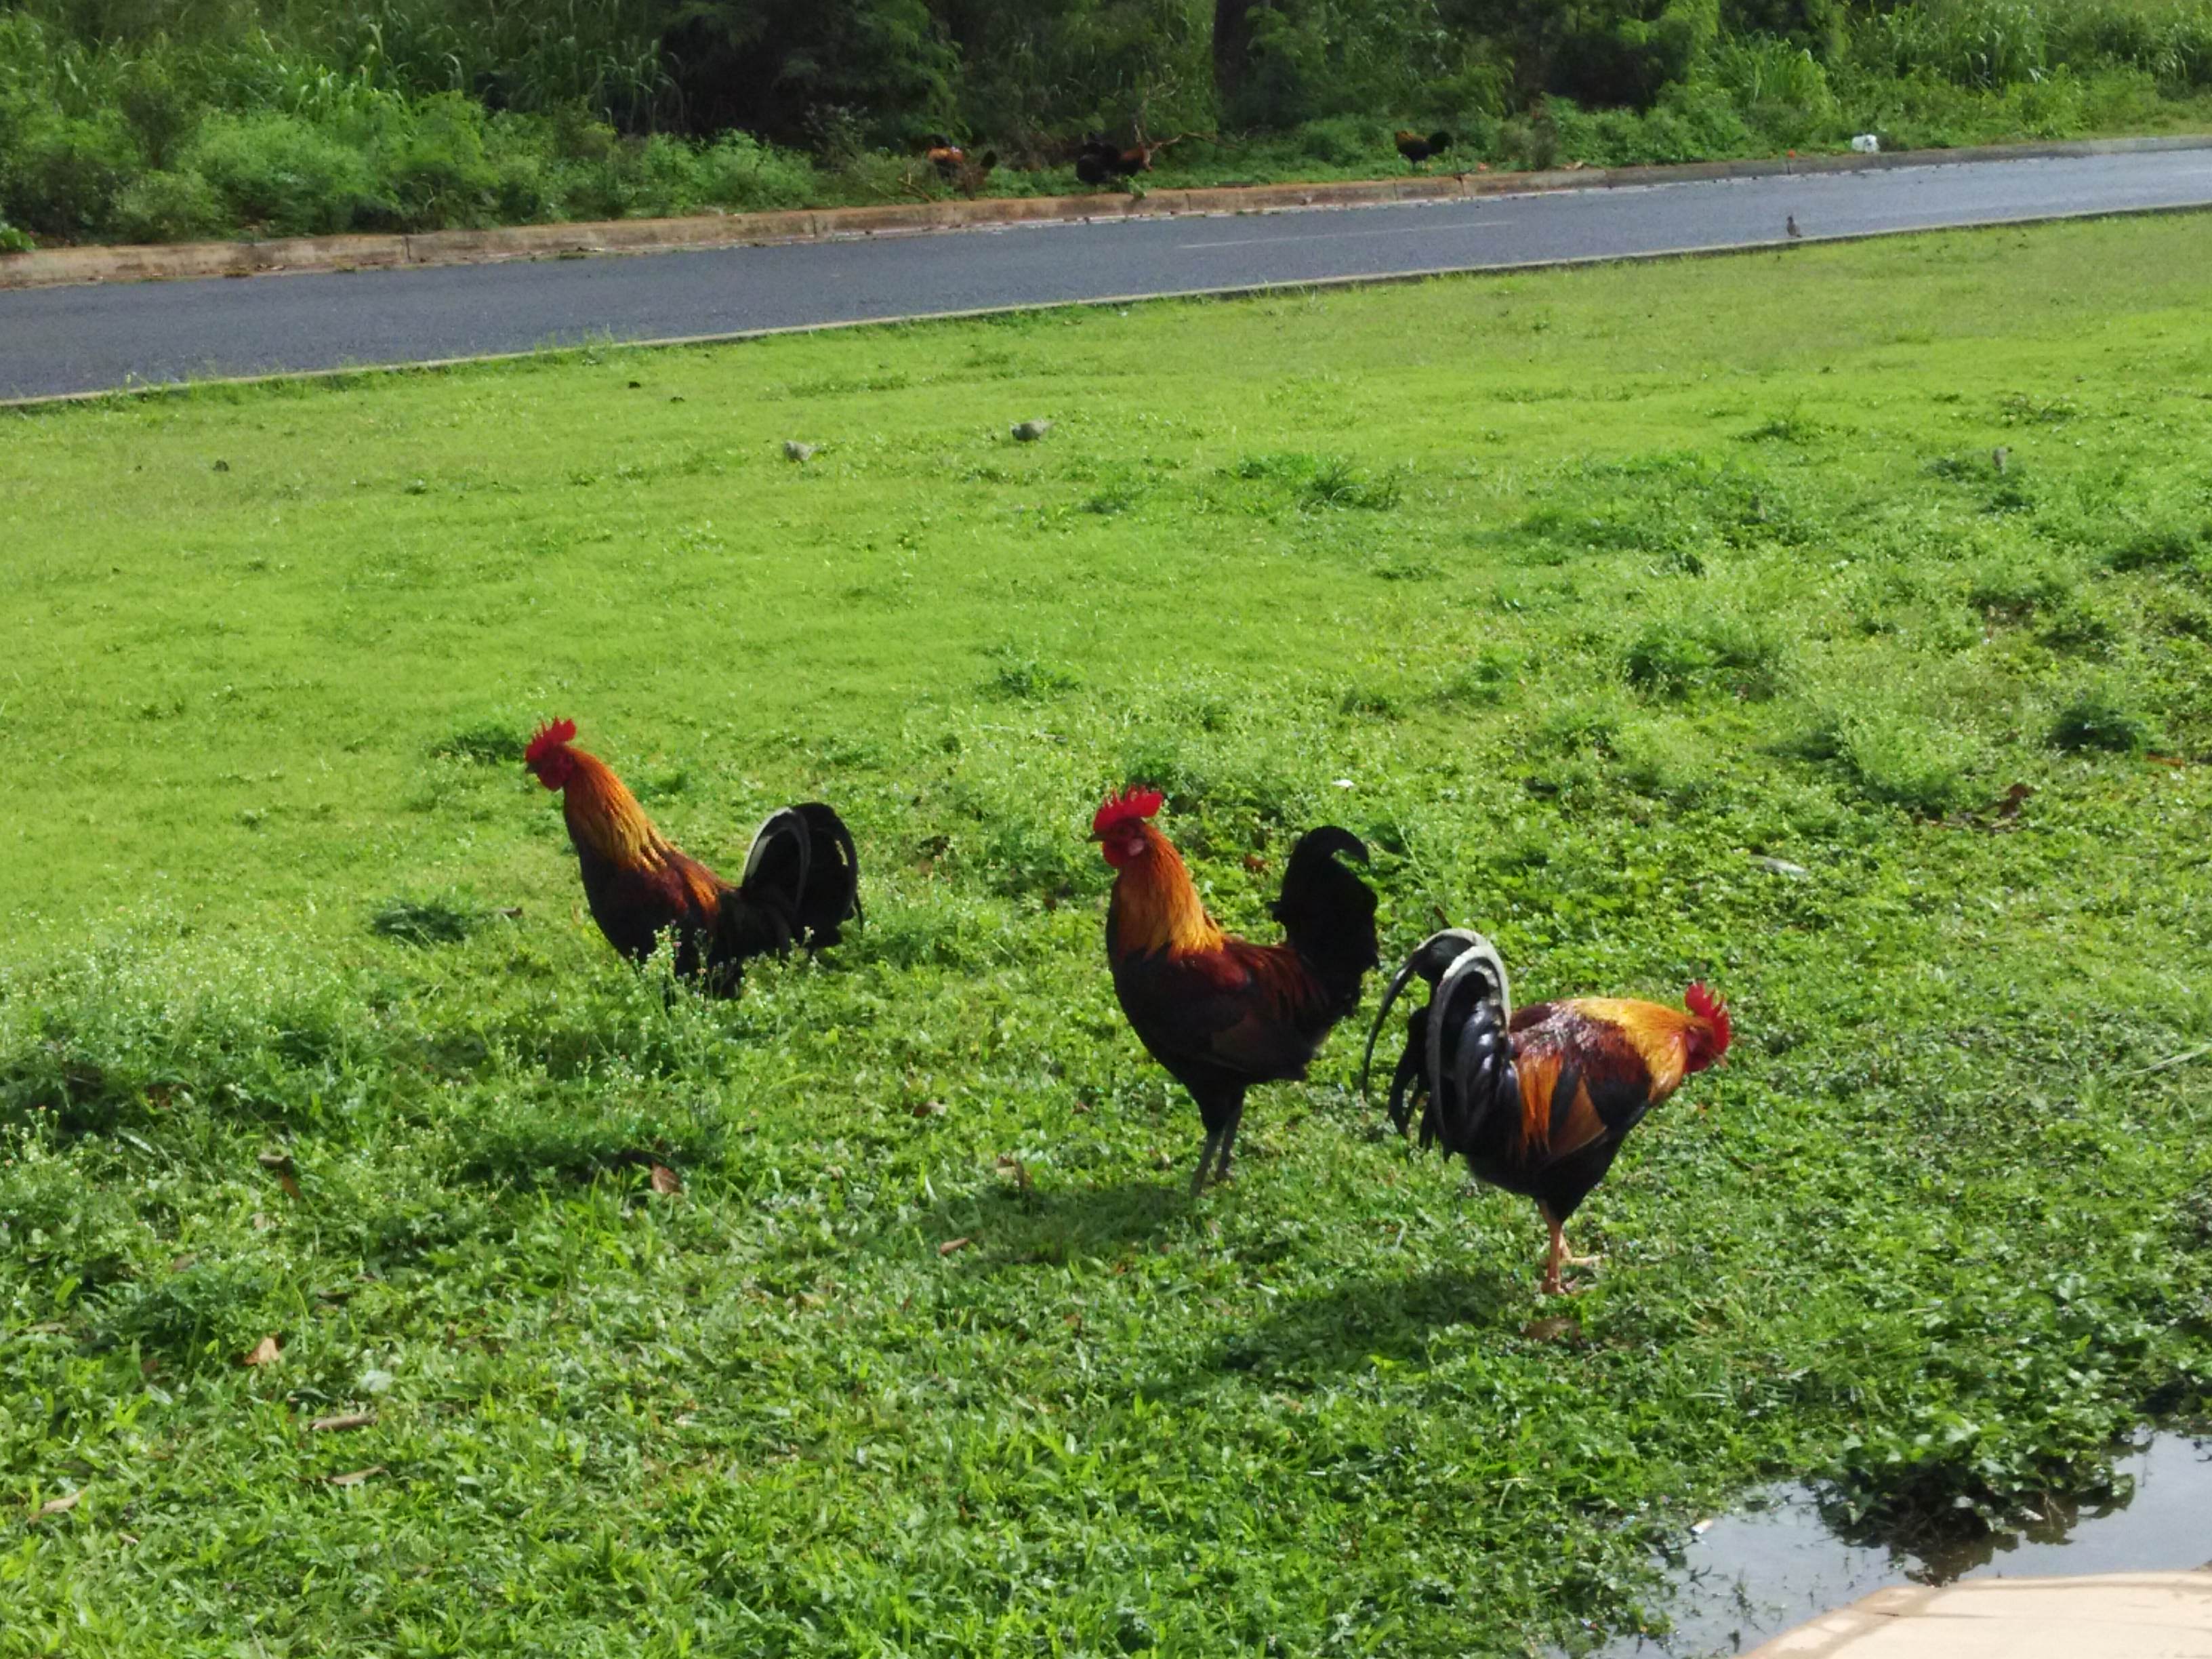 Chickens are everywhere on Kauai Island!